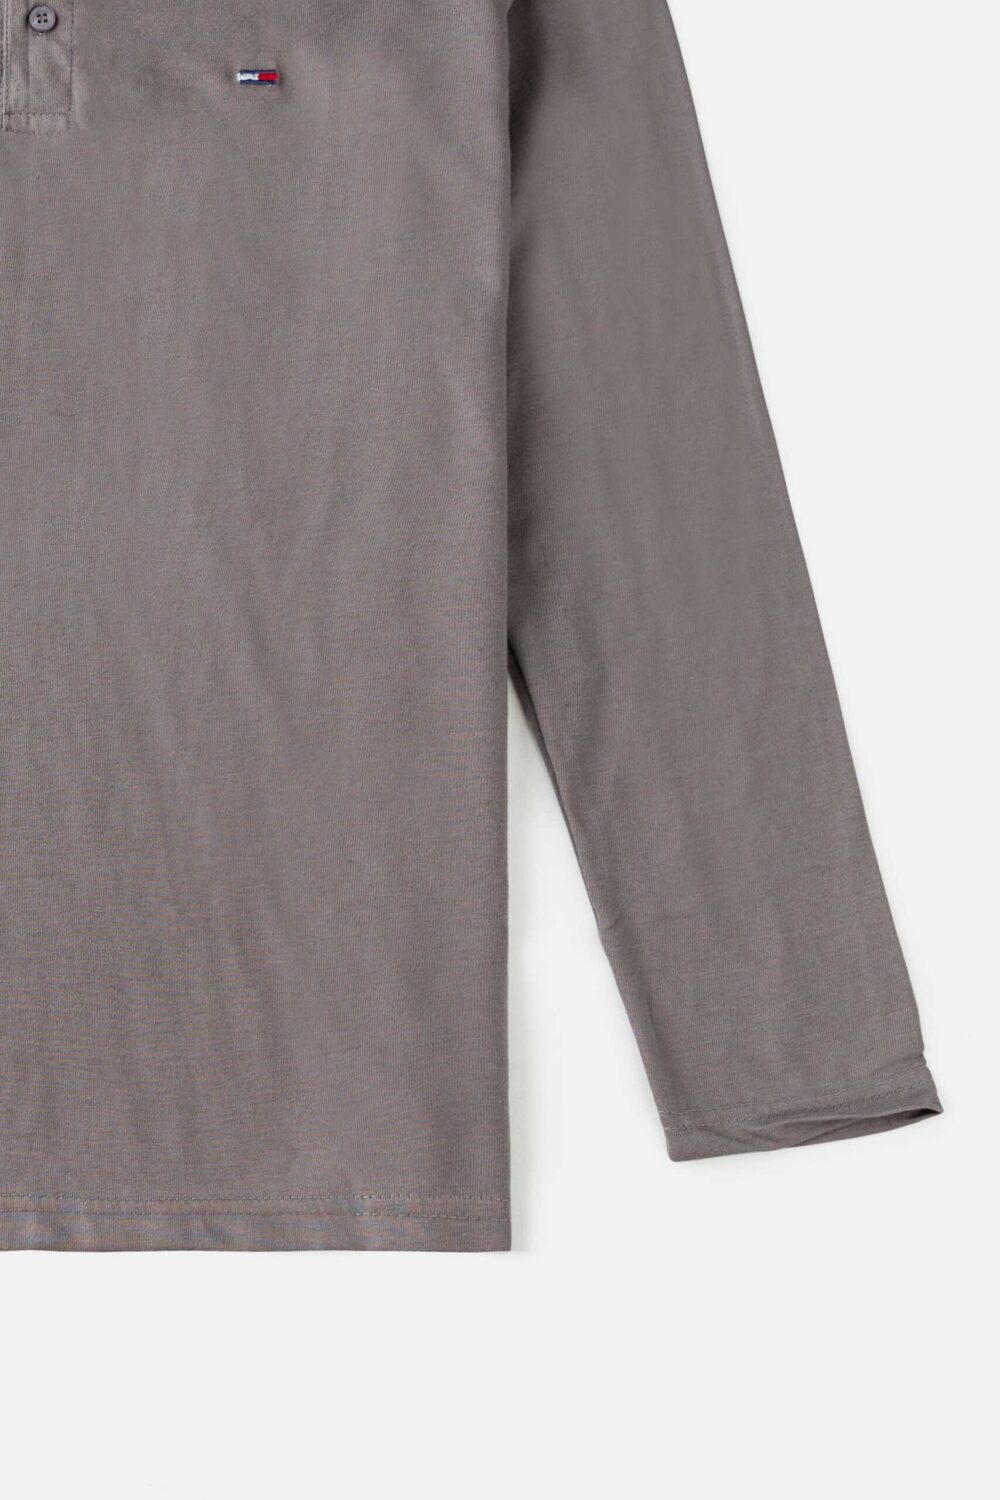 Tommy Premium Full Polo Shirt – Yard Grey